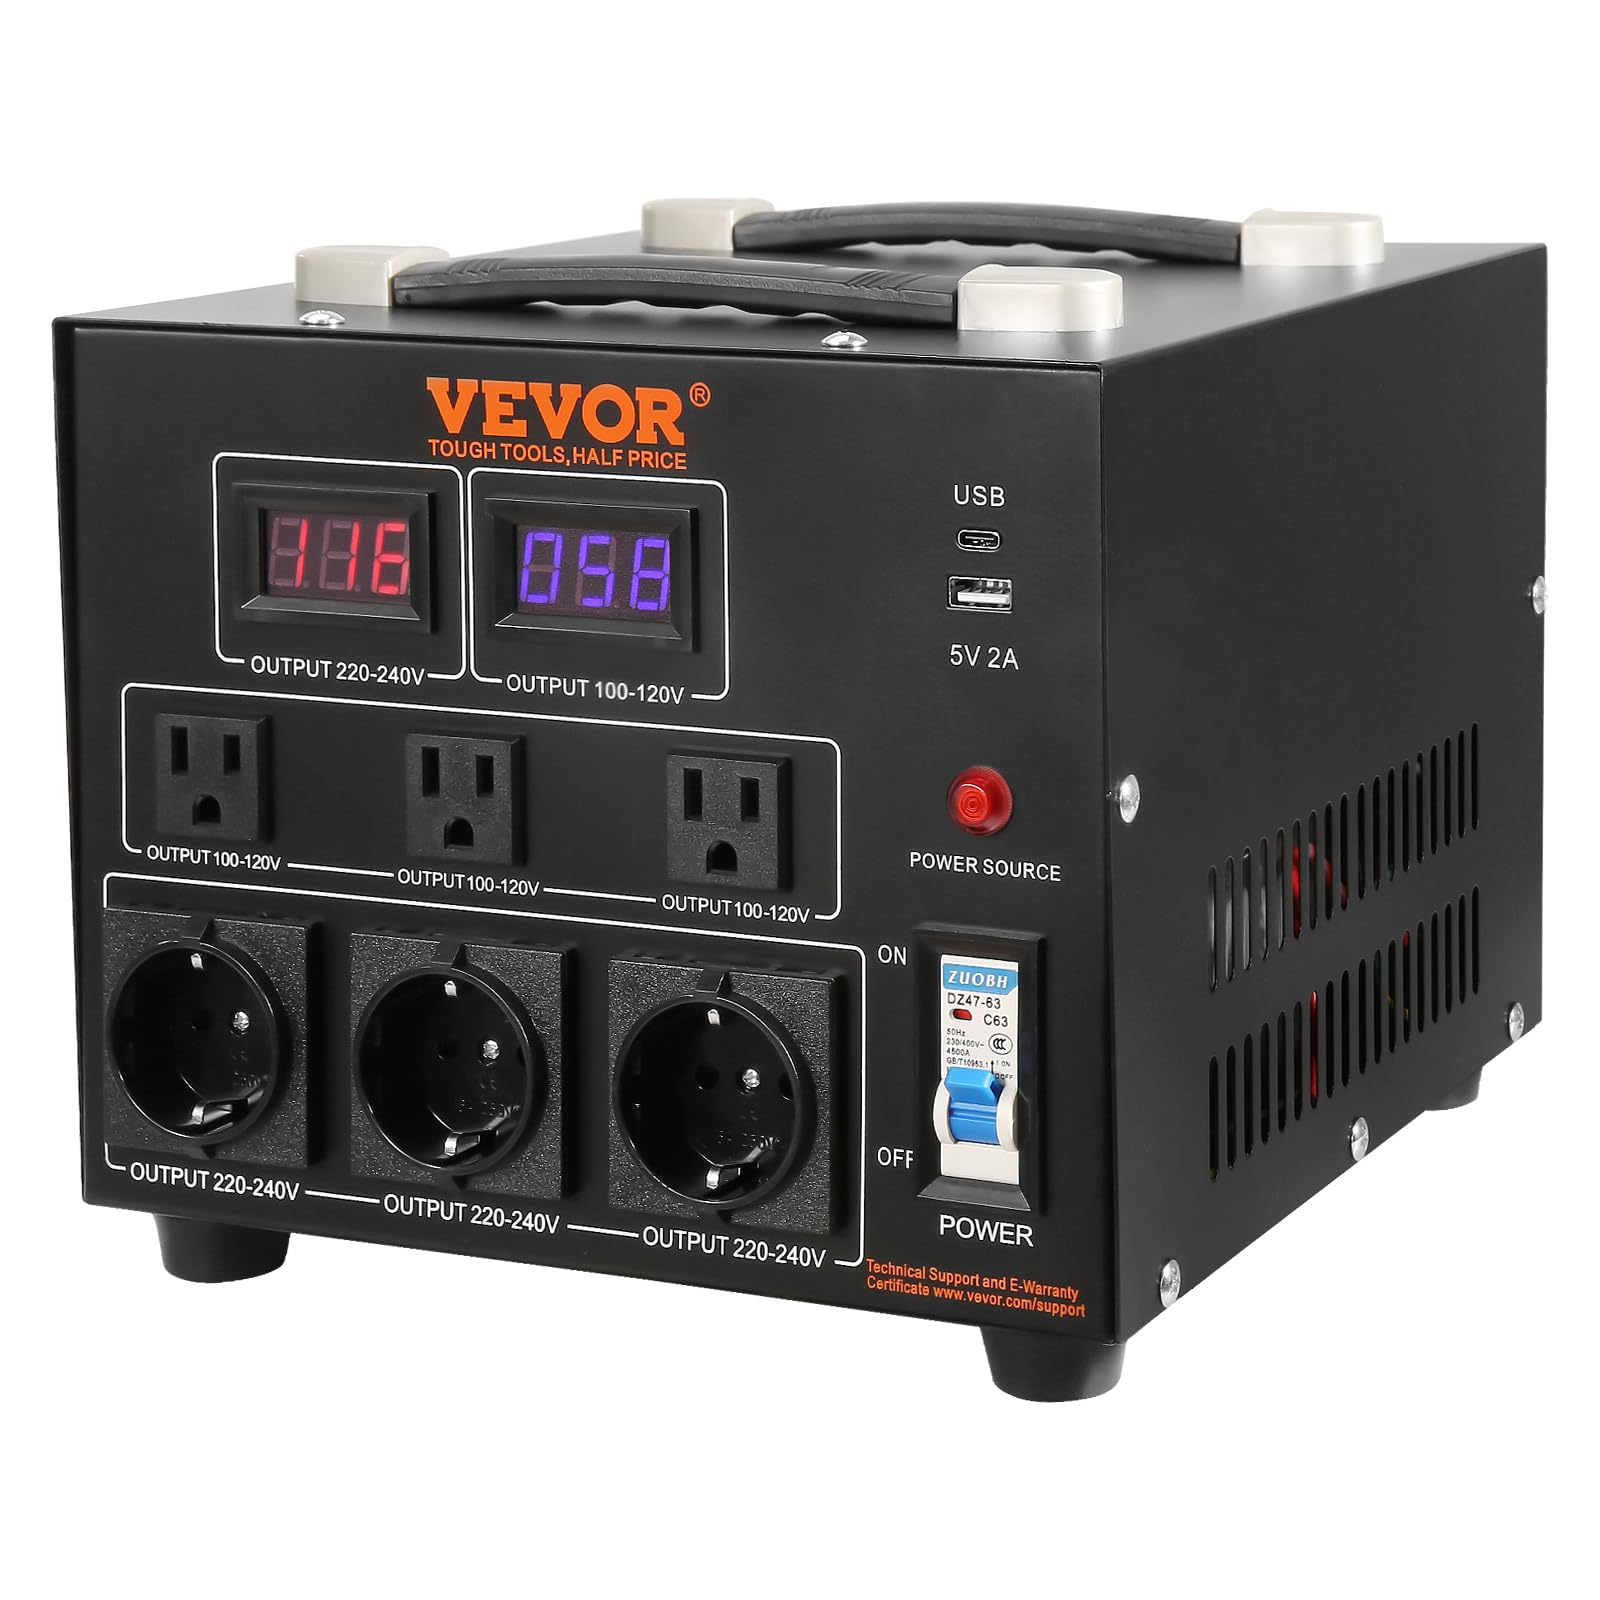 VEVOR Voltage Converter Transformer, 3000W, Heavy Duty Step Up/Down Transformer, Convert from 110 Volt to 220 Volt and from 220 Volt to 110 Volt, with US Outlet EU Outlet 5V USB Port, CE Certified